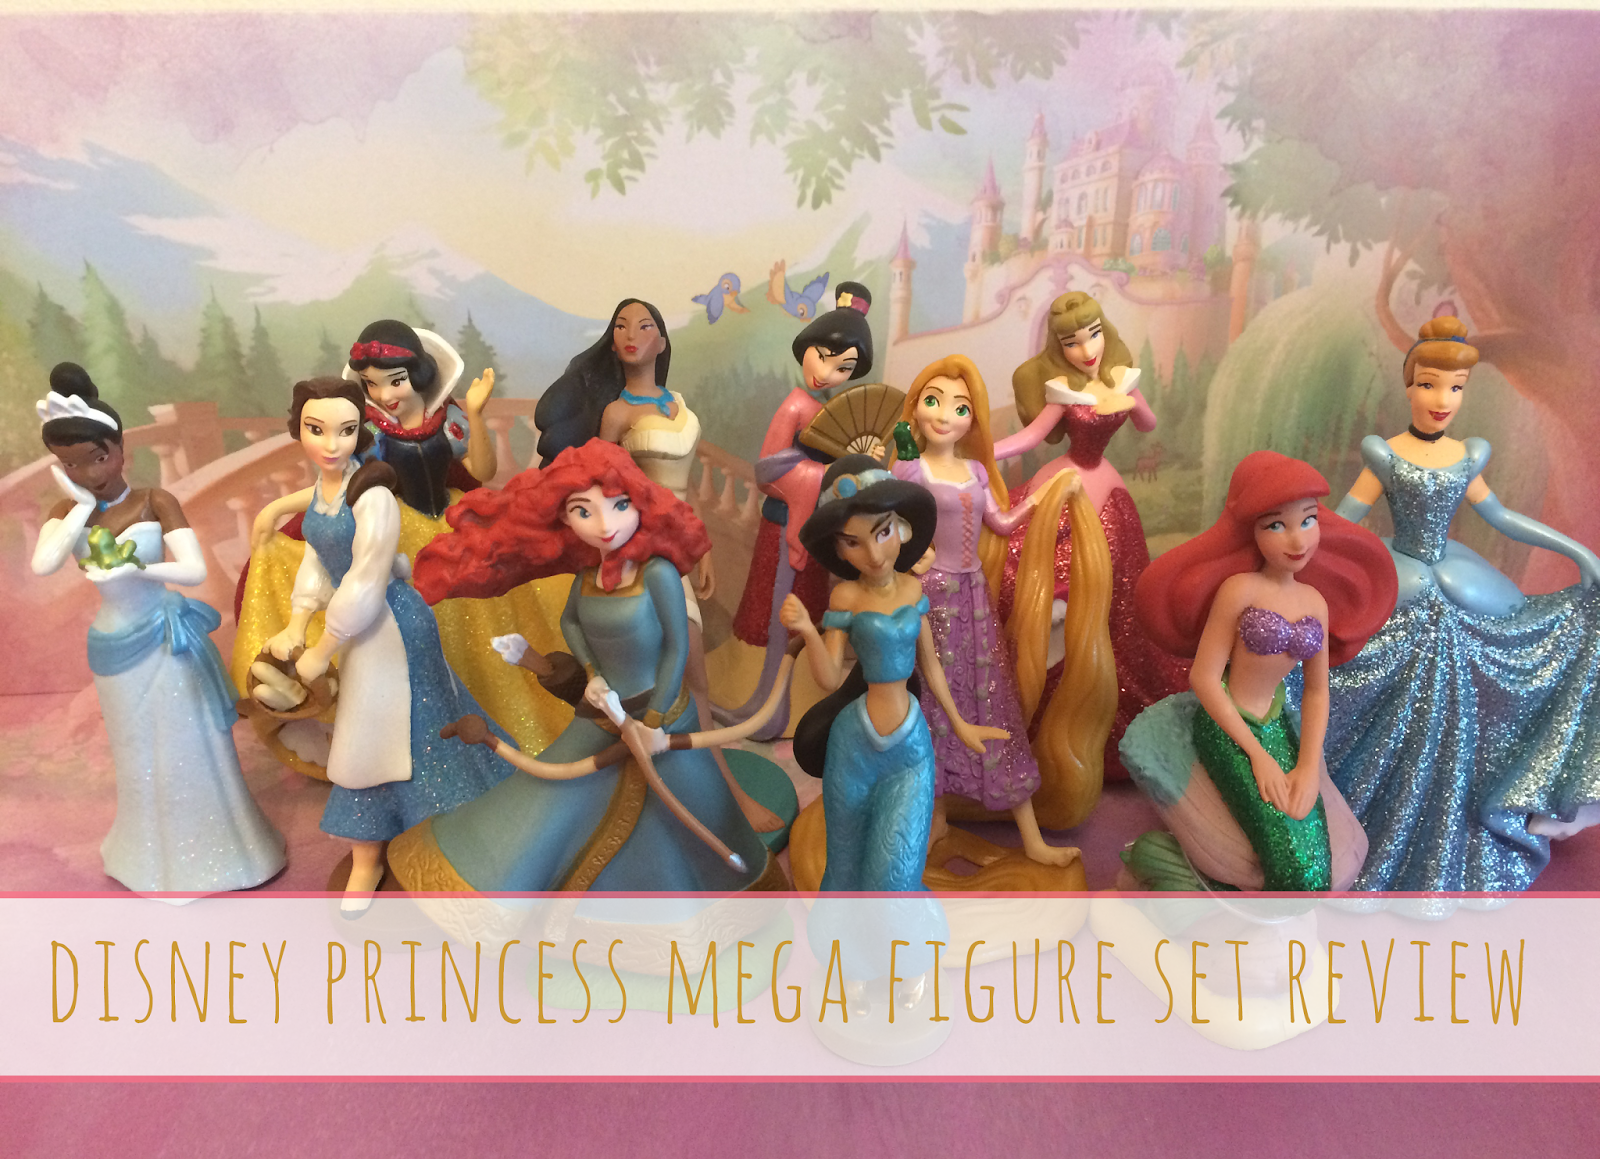 Disney Princess Mega Figure Set Review The Perks of being Me